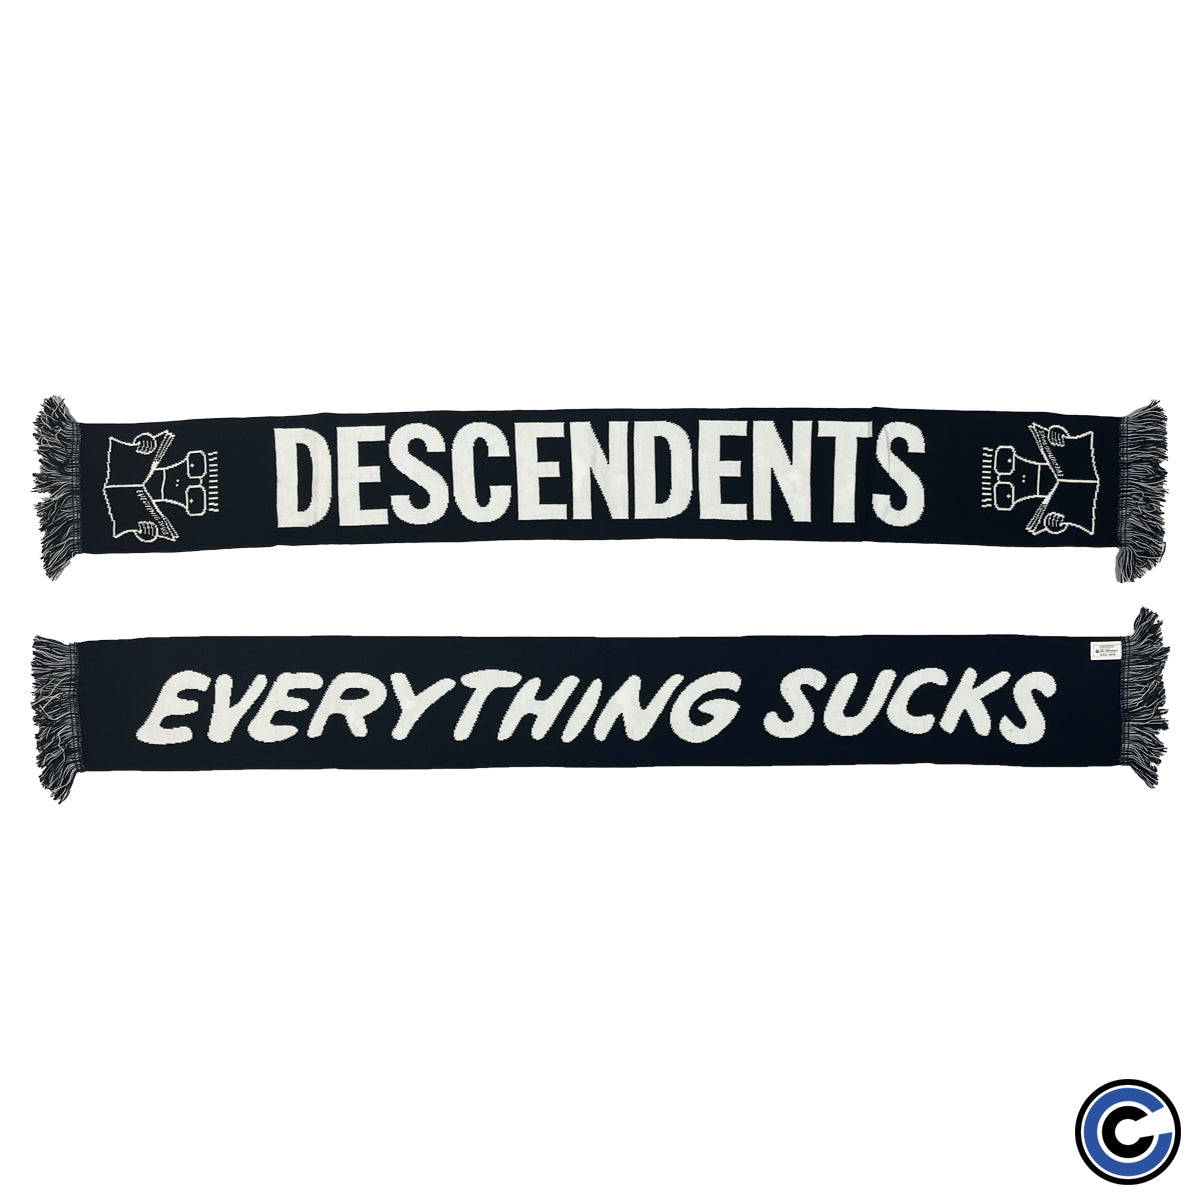 Descendents "Everything Sucks" Scarf